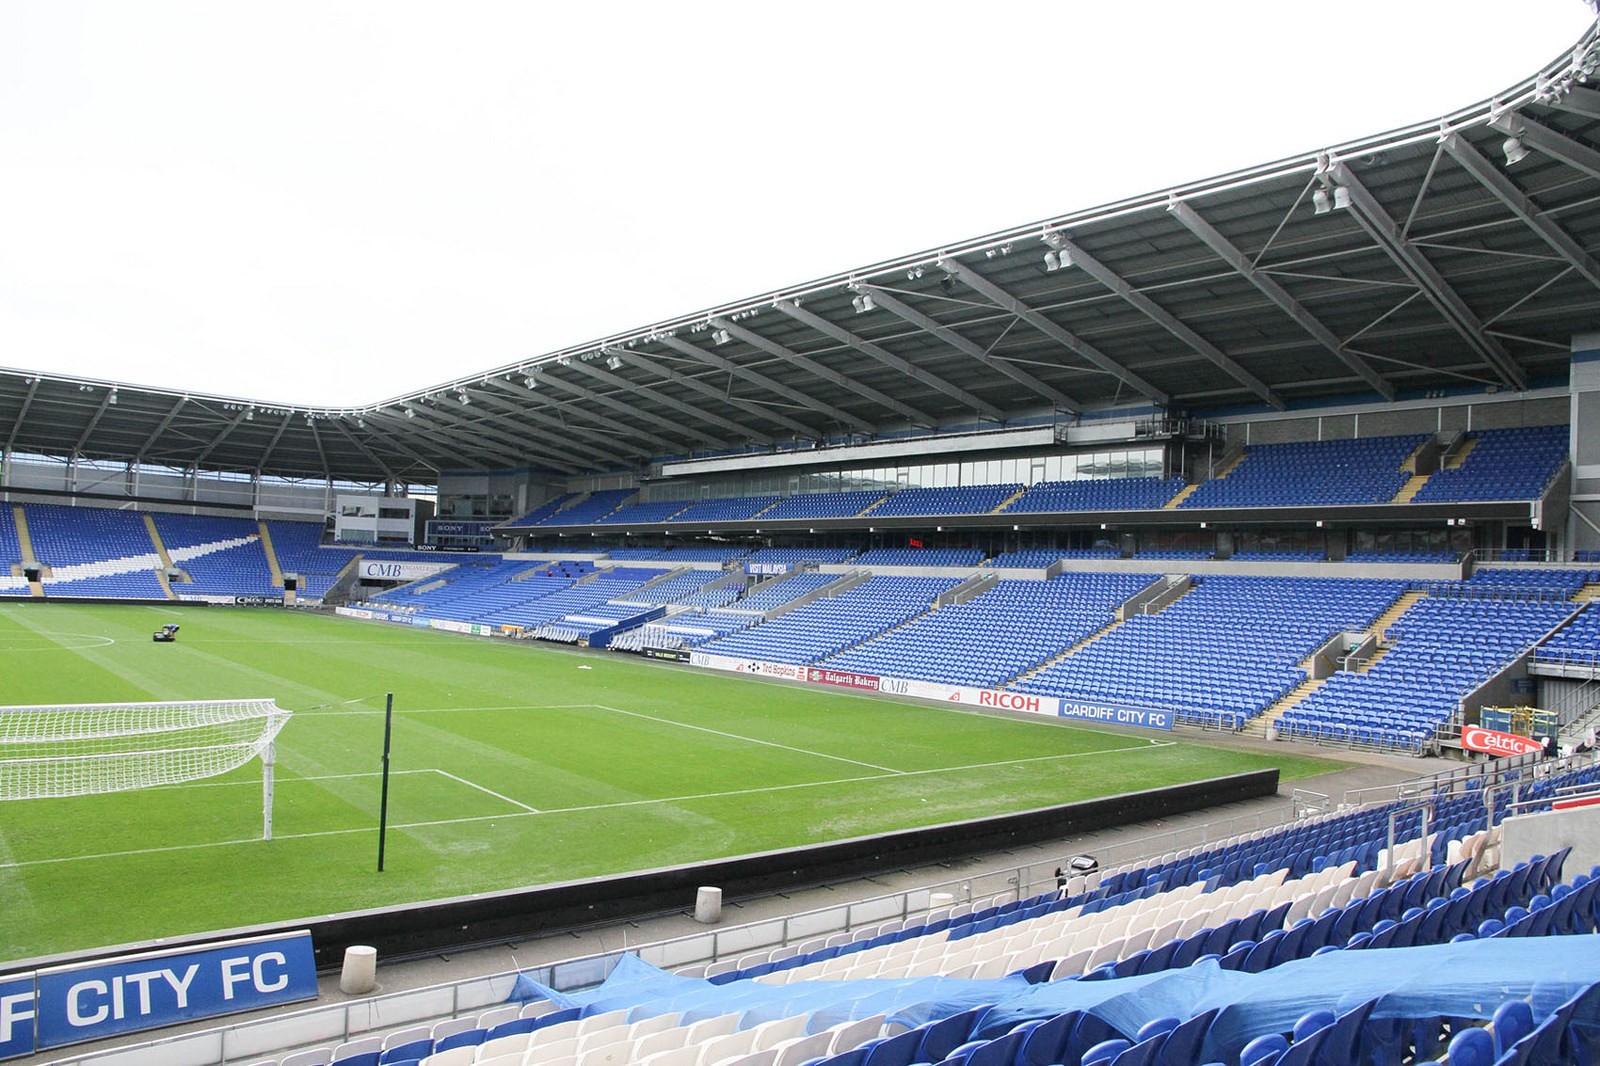 Cardiff City FC, Venues